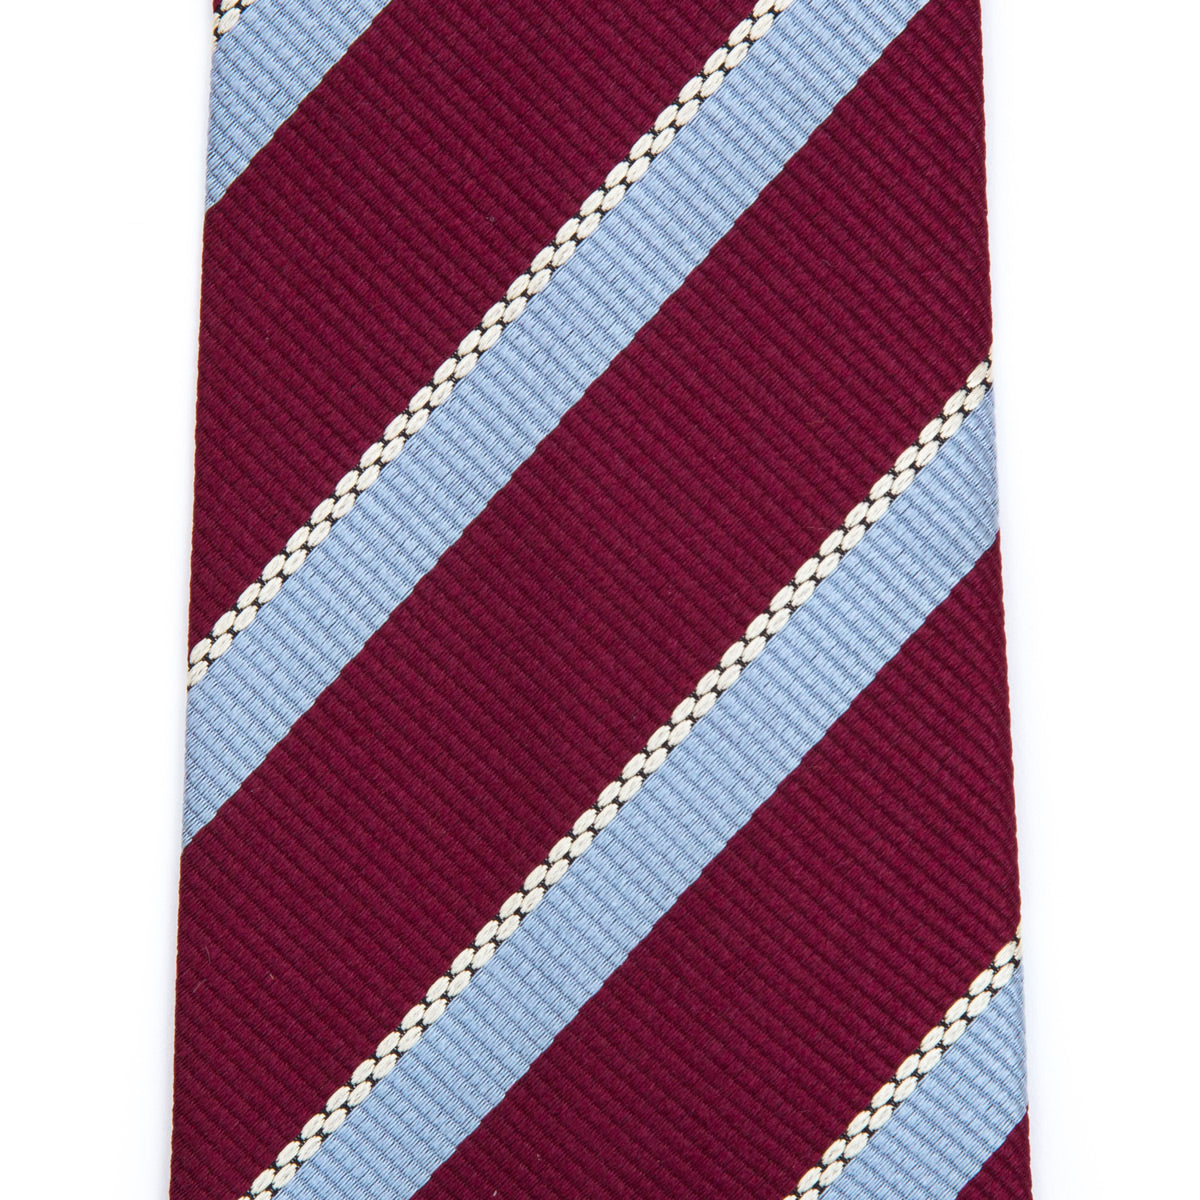 Light blue striped tie